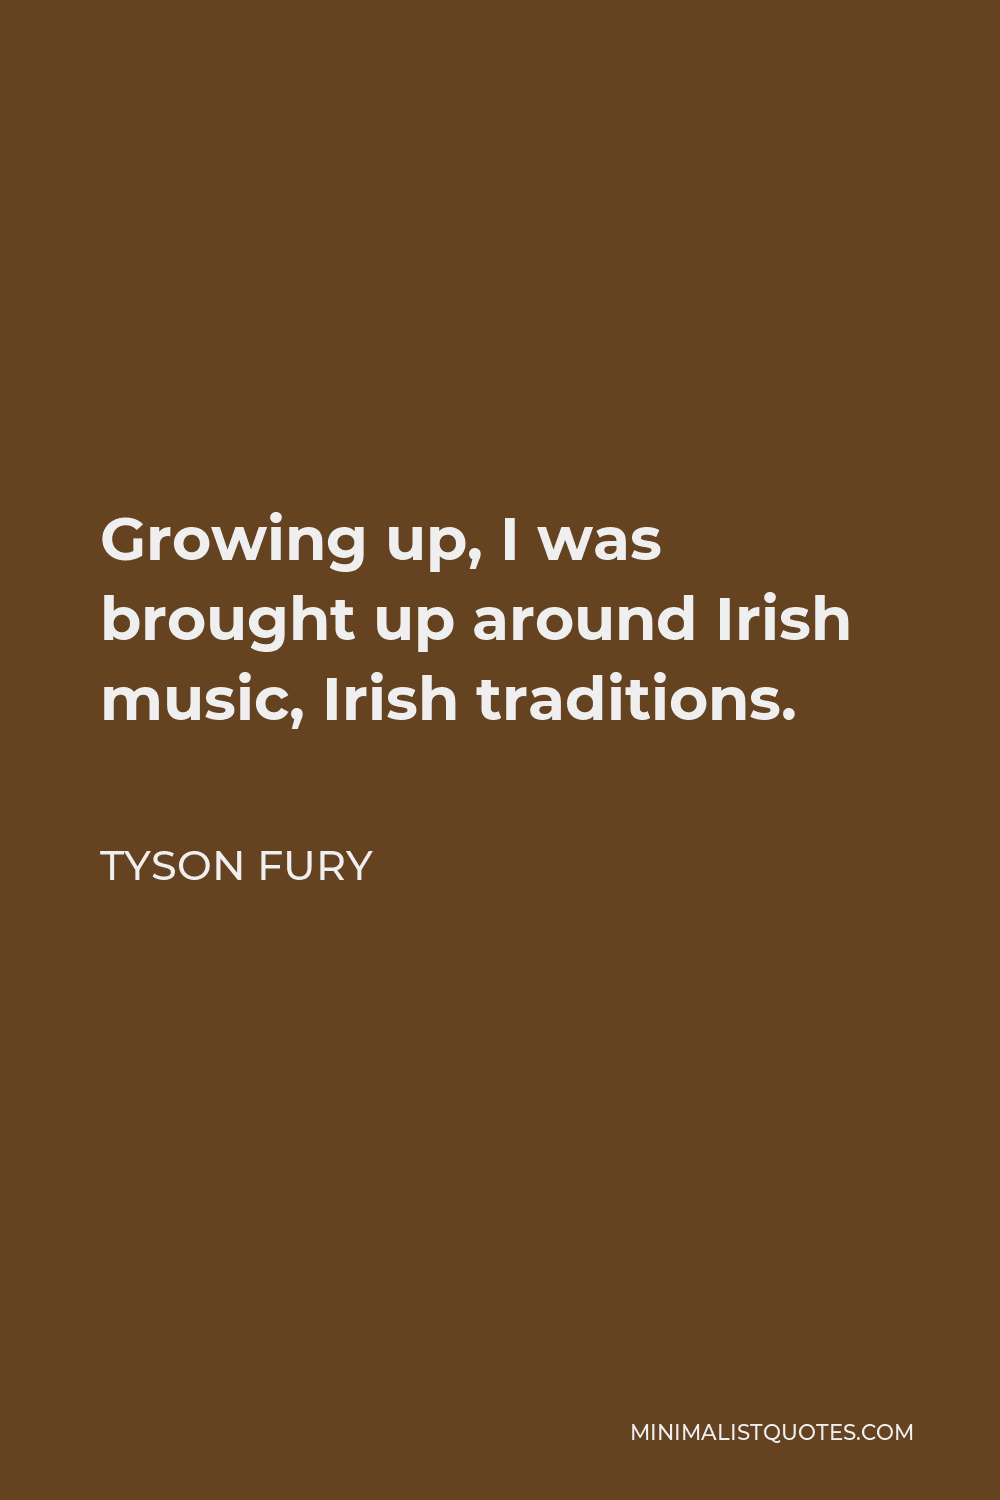 Tyson Fury Quote - Growing up, I was brought up around Irish music, Irish traditions.